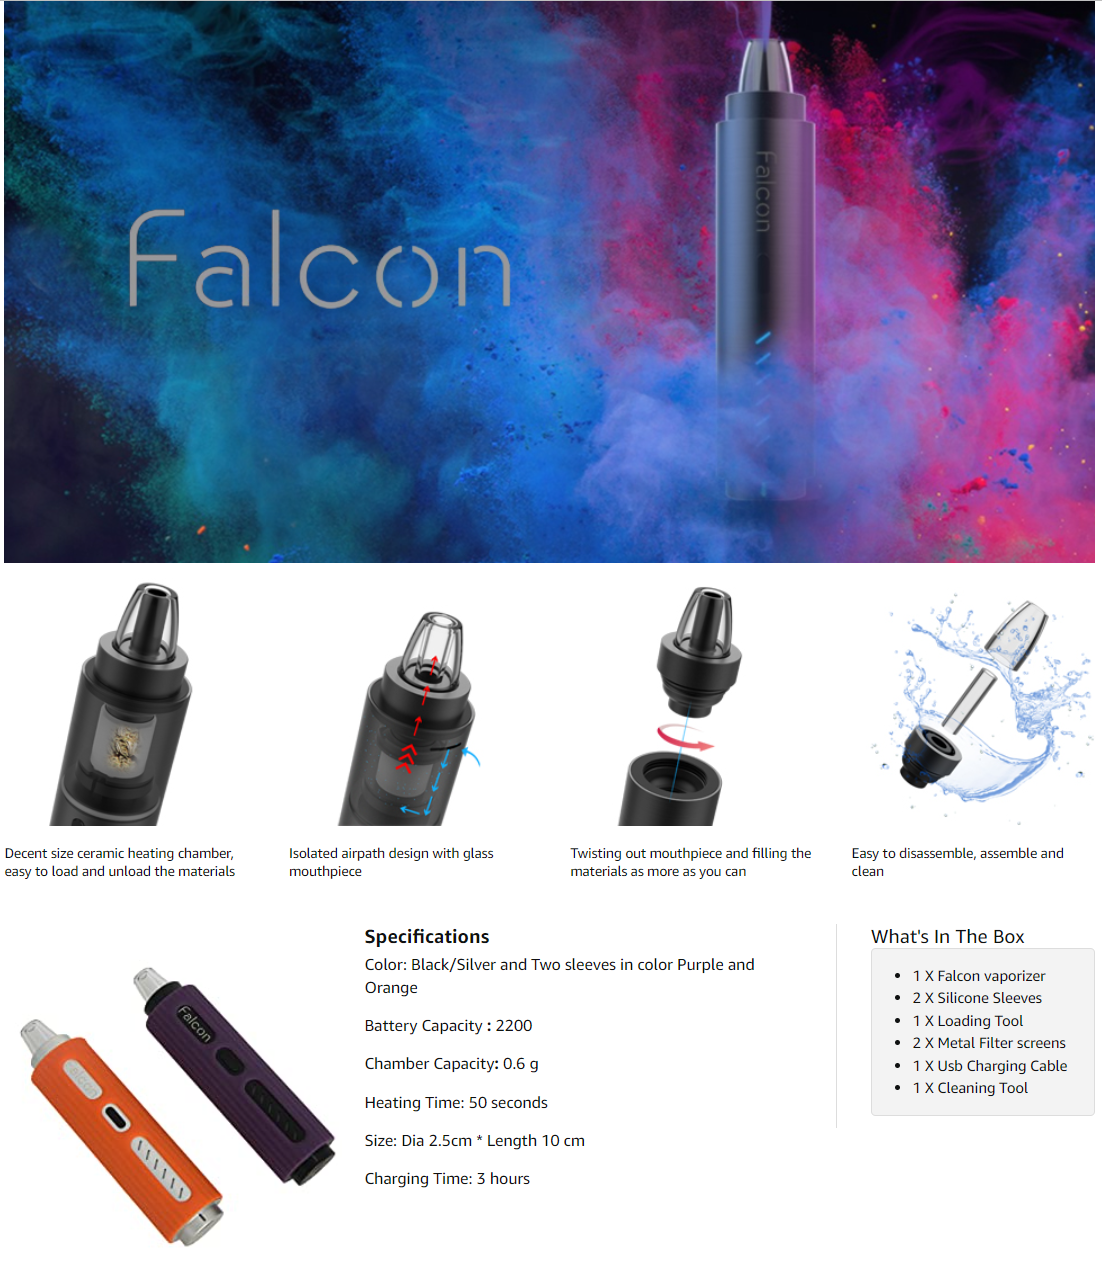 Falcon Vaporizer with 2 Silicon Sleeves